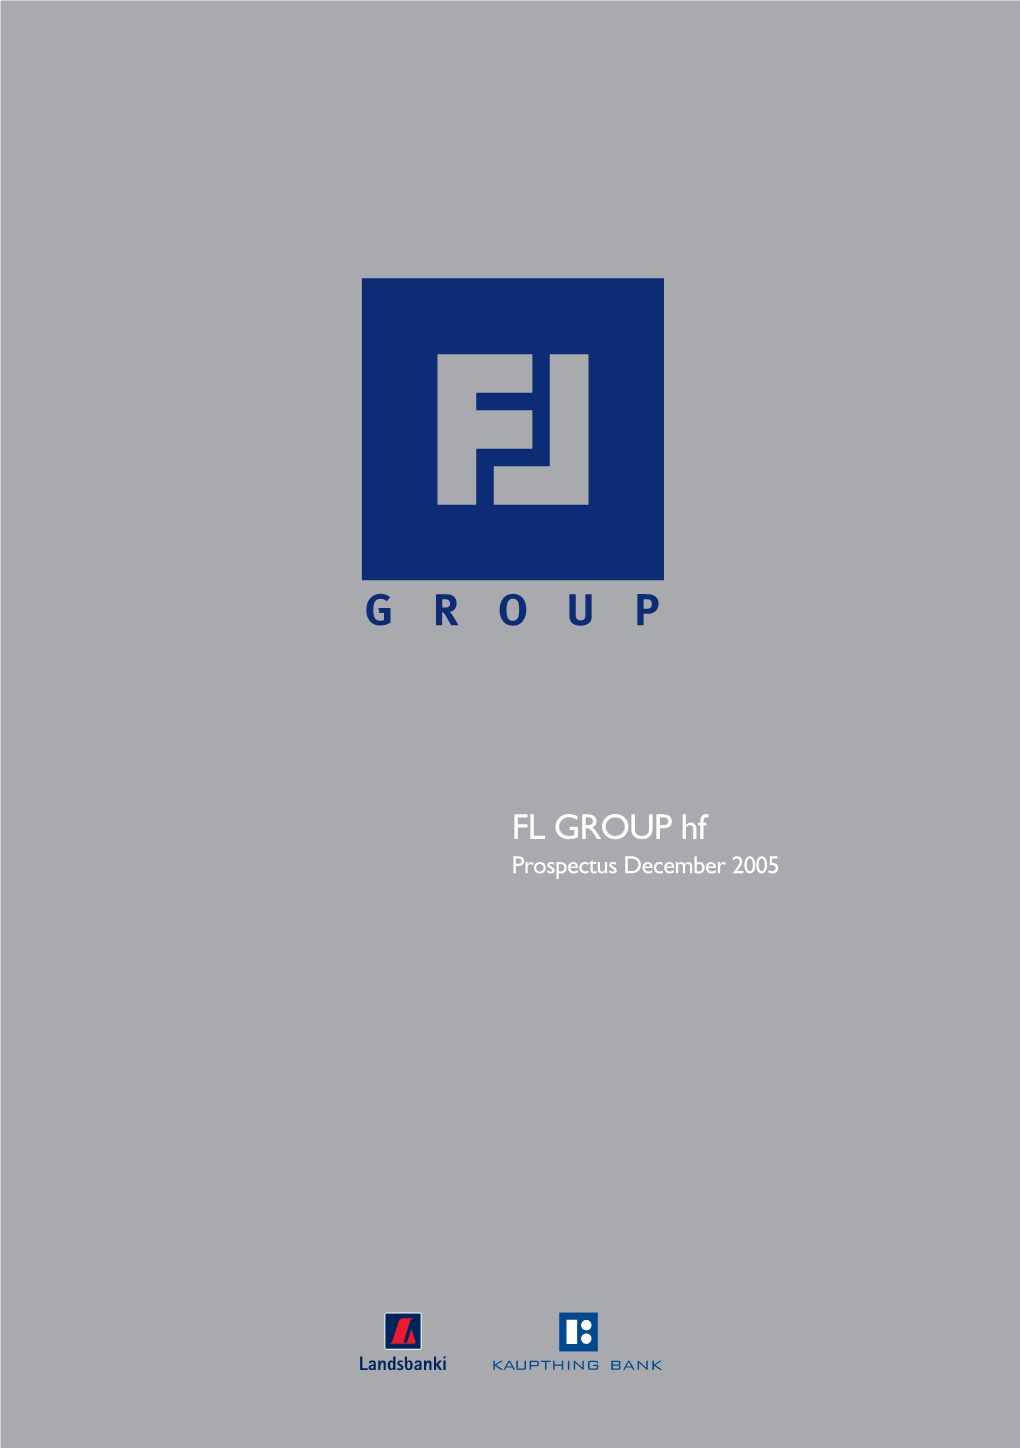 FL GROUP Hf Prospectus December 2005 Prospectus December 2005